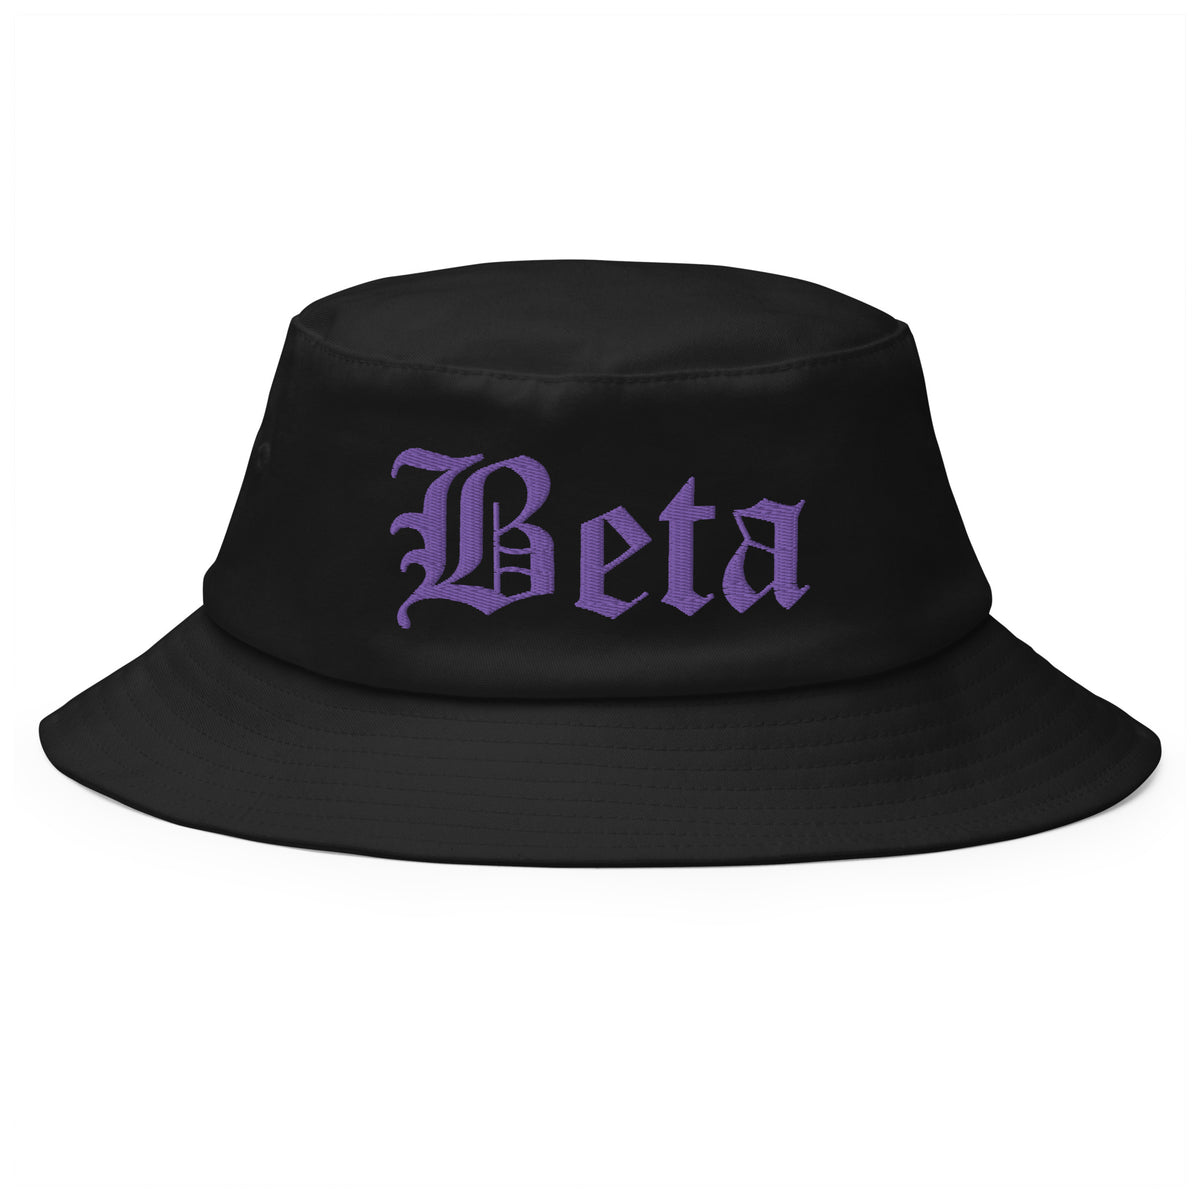 Back ordered) Tau Beta Sigma - Old School Bucket Hat - The Upper